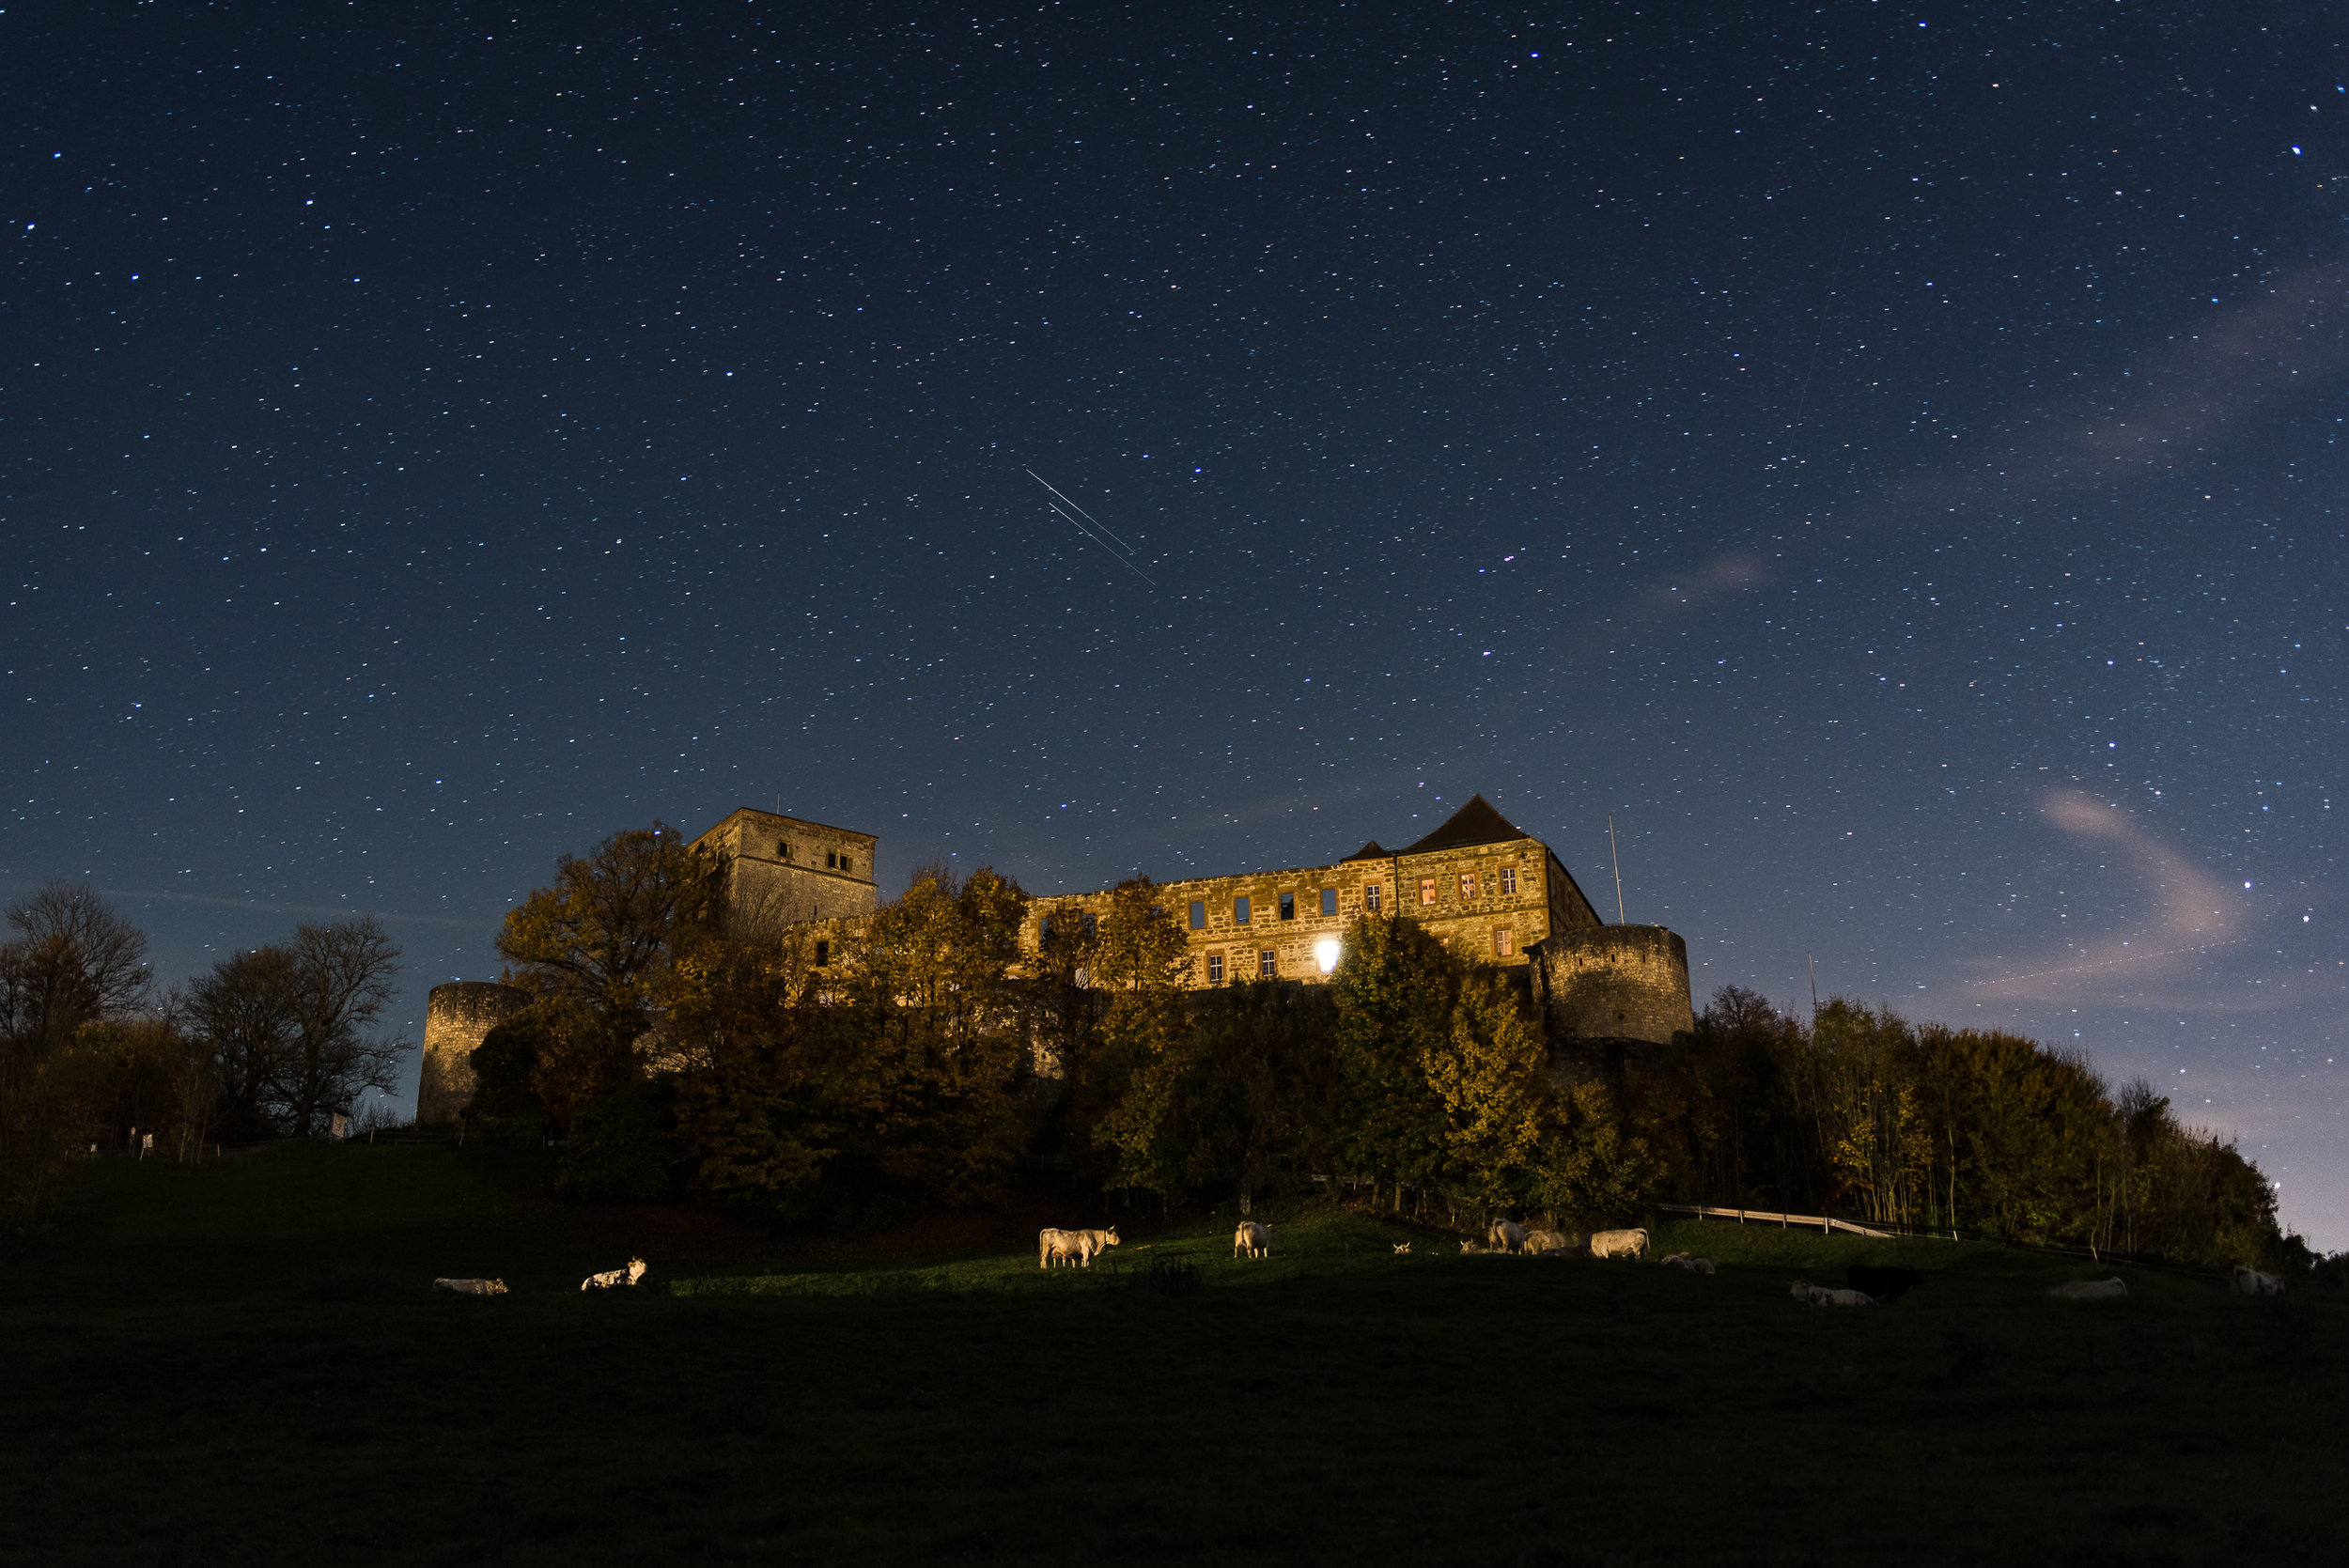 Giechburg bei Nacht - Starry Sky